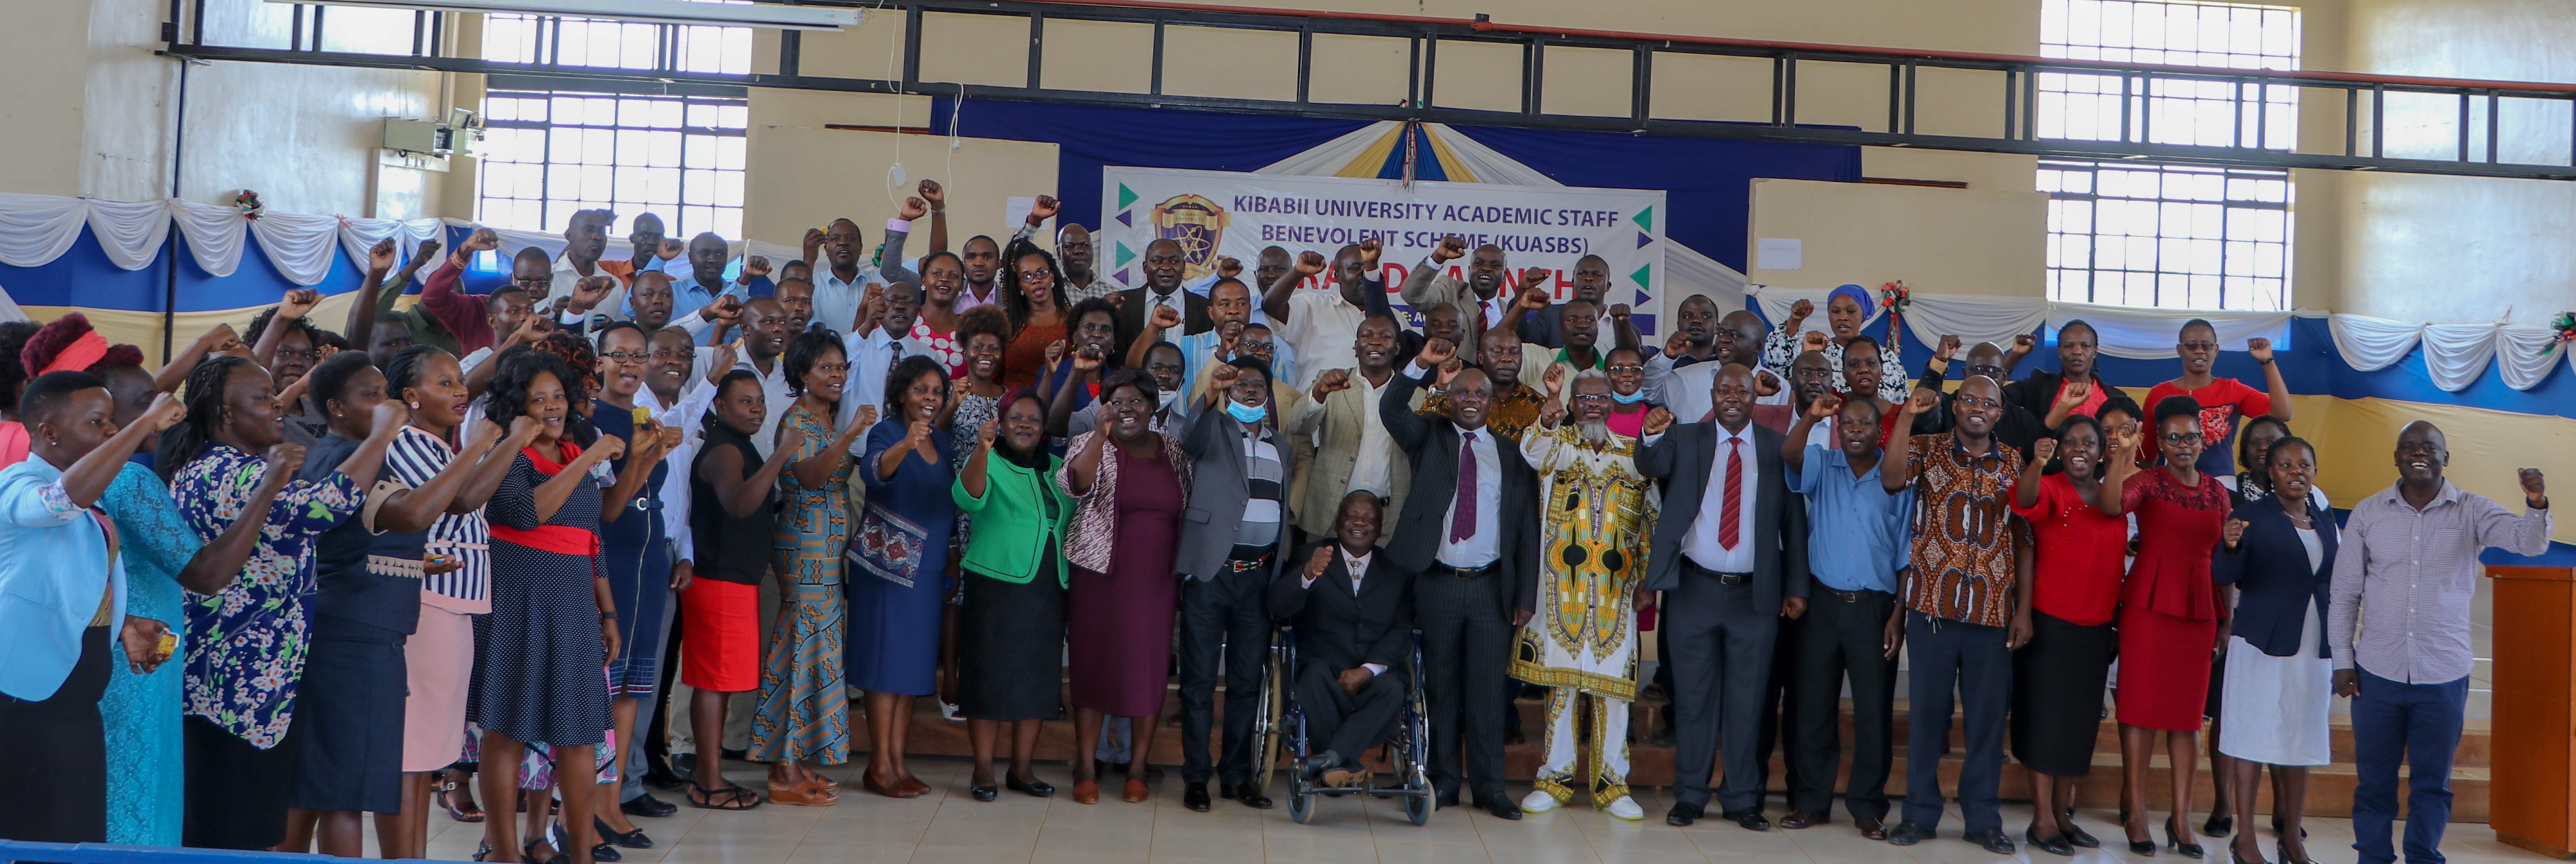 Kibabii Academic Staff Benevolent Scheme (KUASBS) Grand Launch 